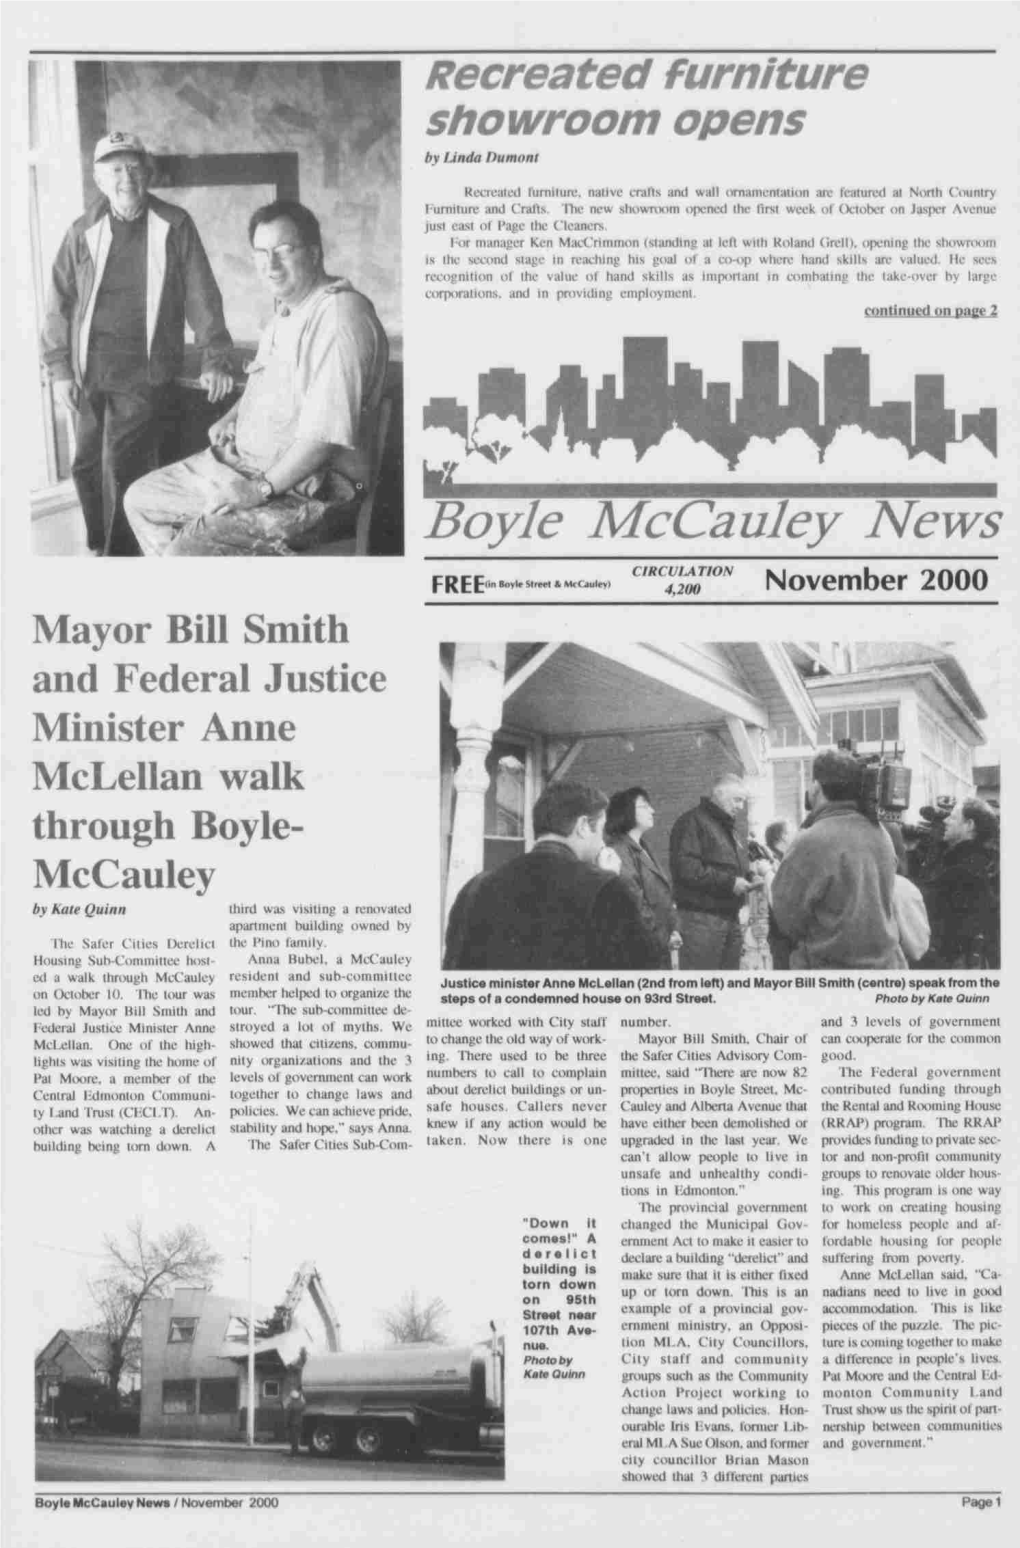 Boyle Mccauley News W P (In Boyle Street & Mccauley) J 2Q0 November 2000 Mayor Bill Smith and Federal Justice Minister Anne Mclellan Walk Through